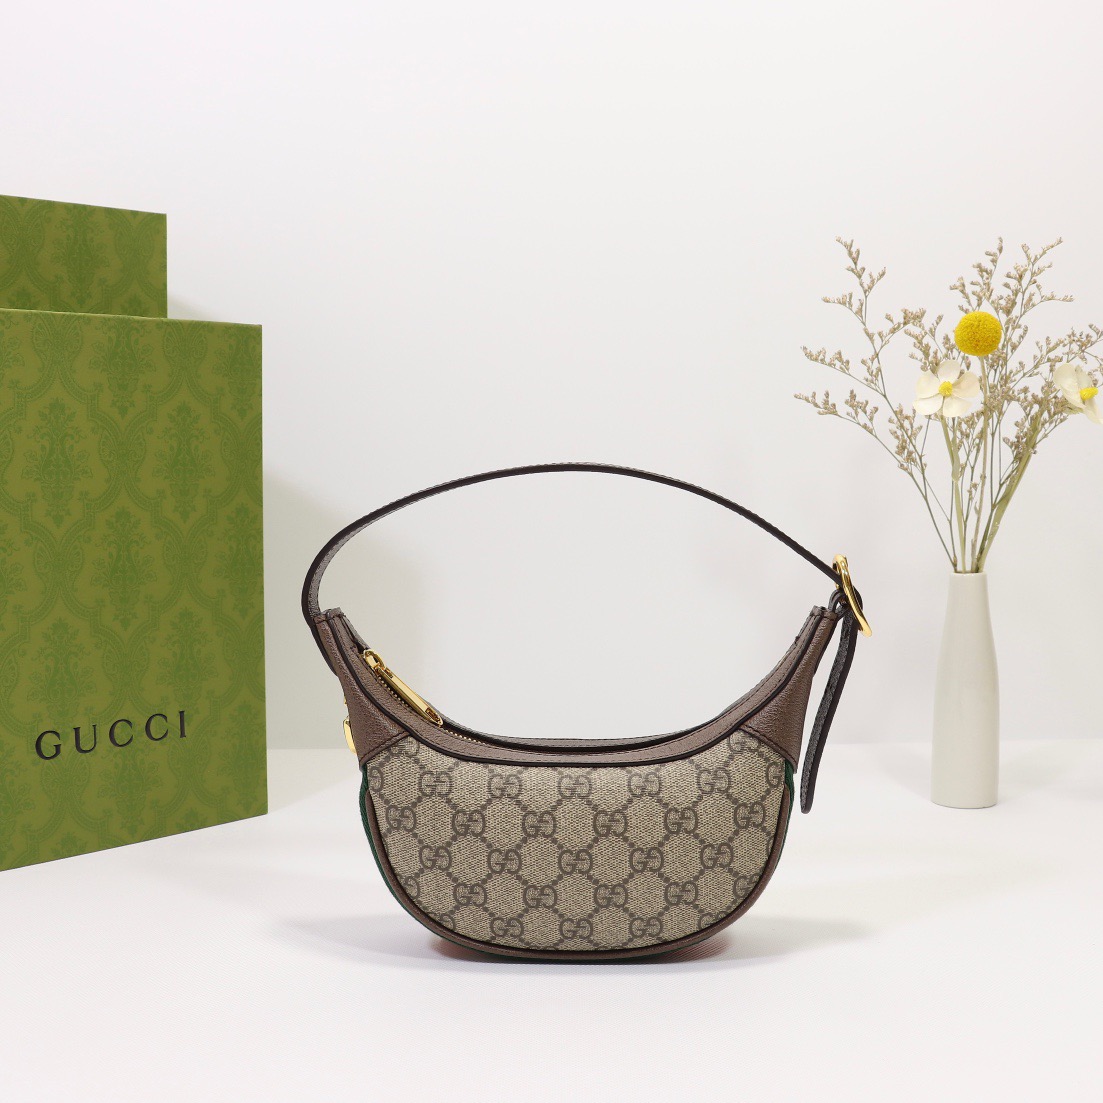 GUCCl womens handbag 658551 20x15x5cm